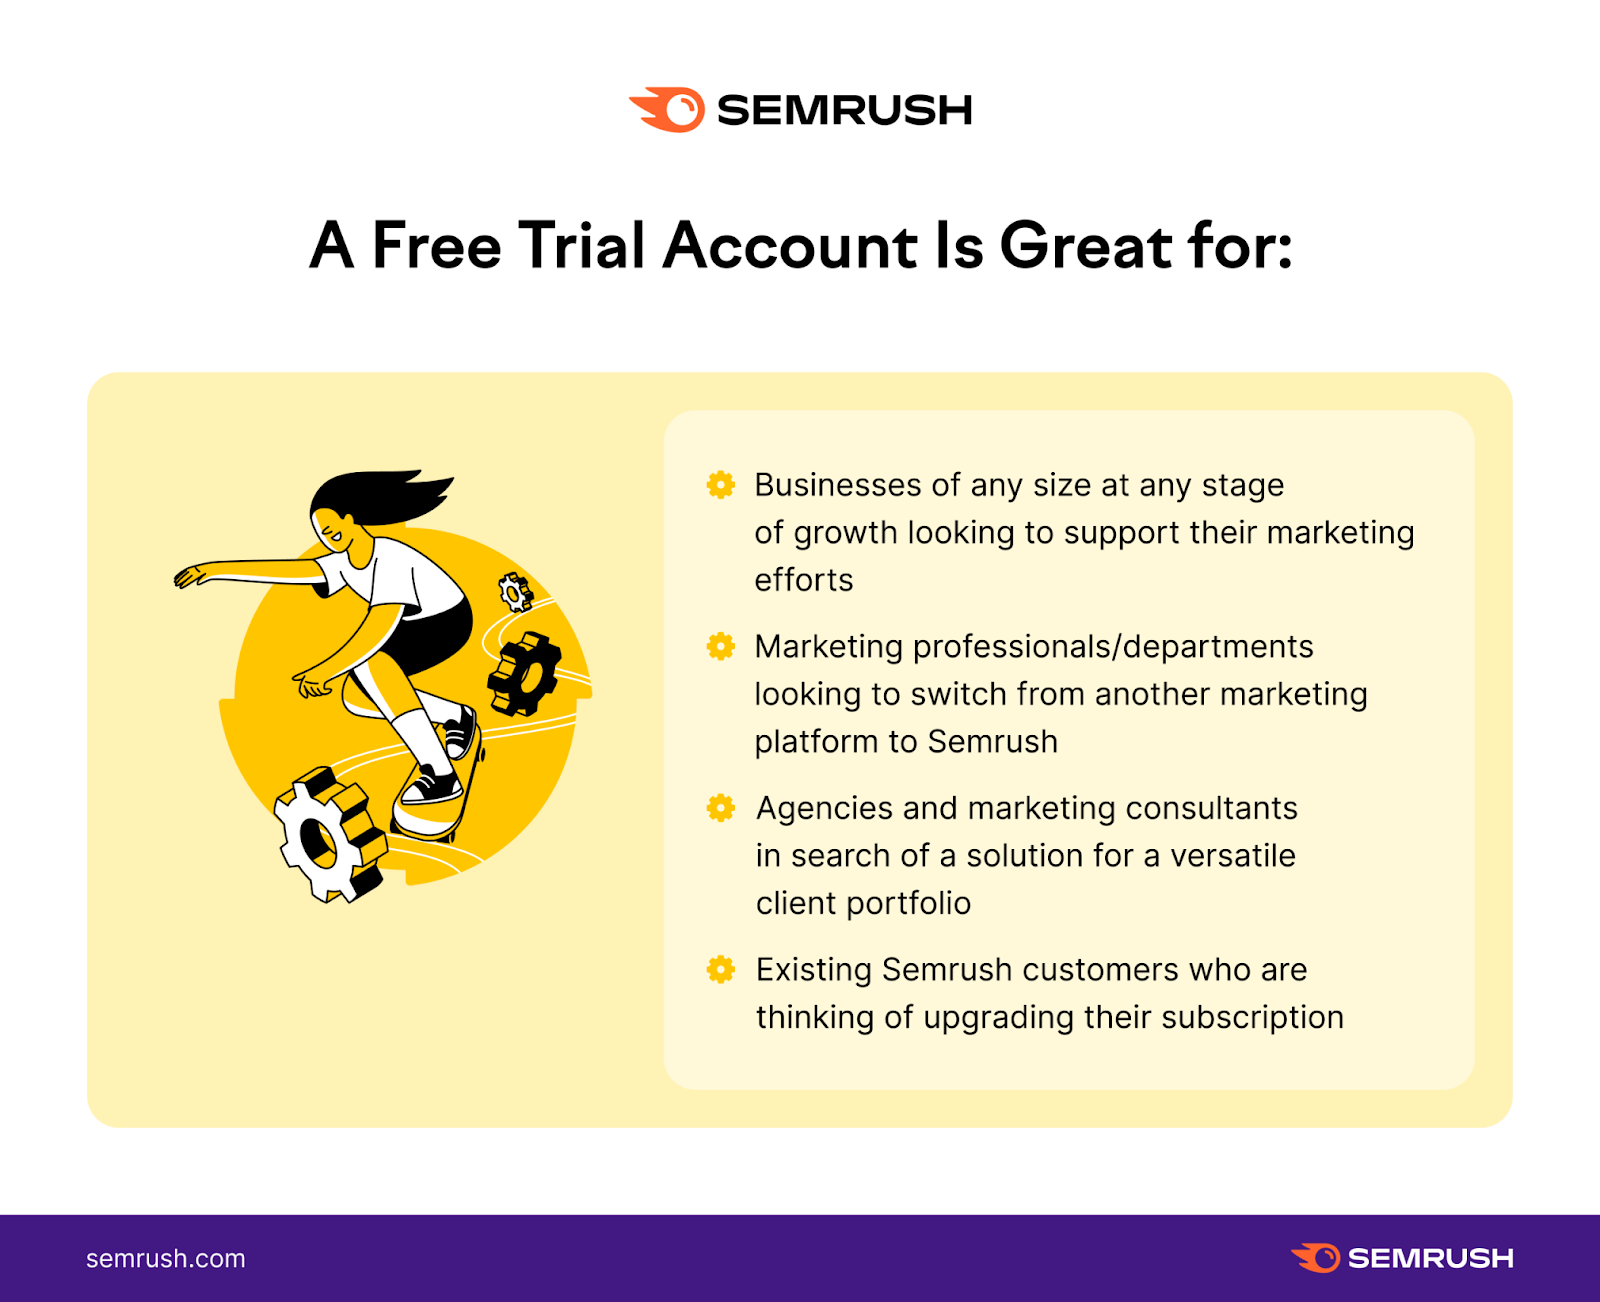 Semrush free trial account